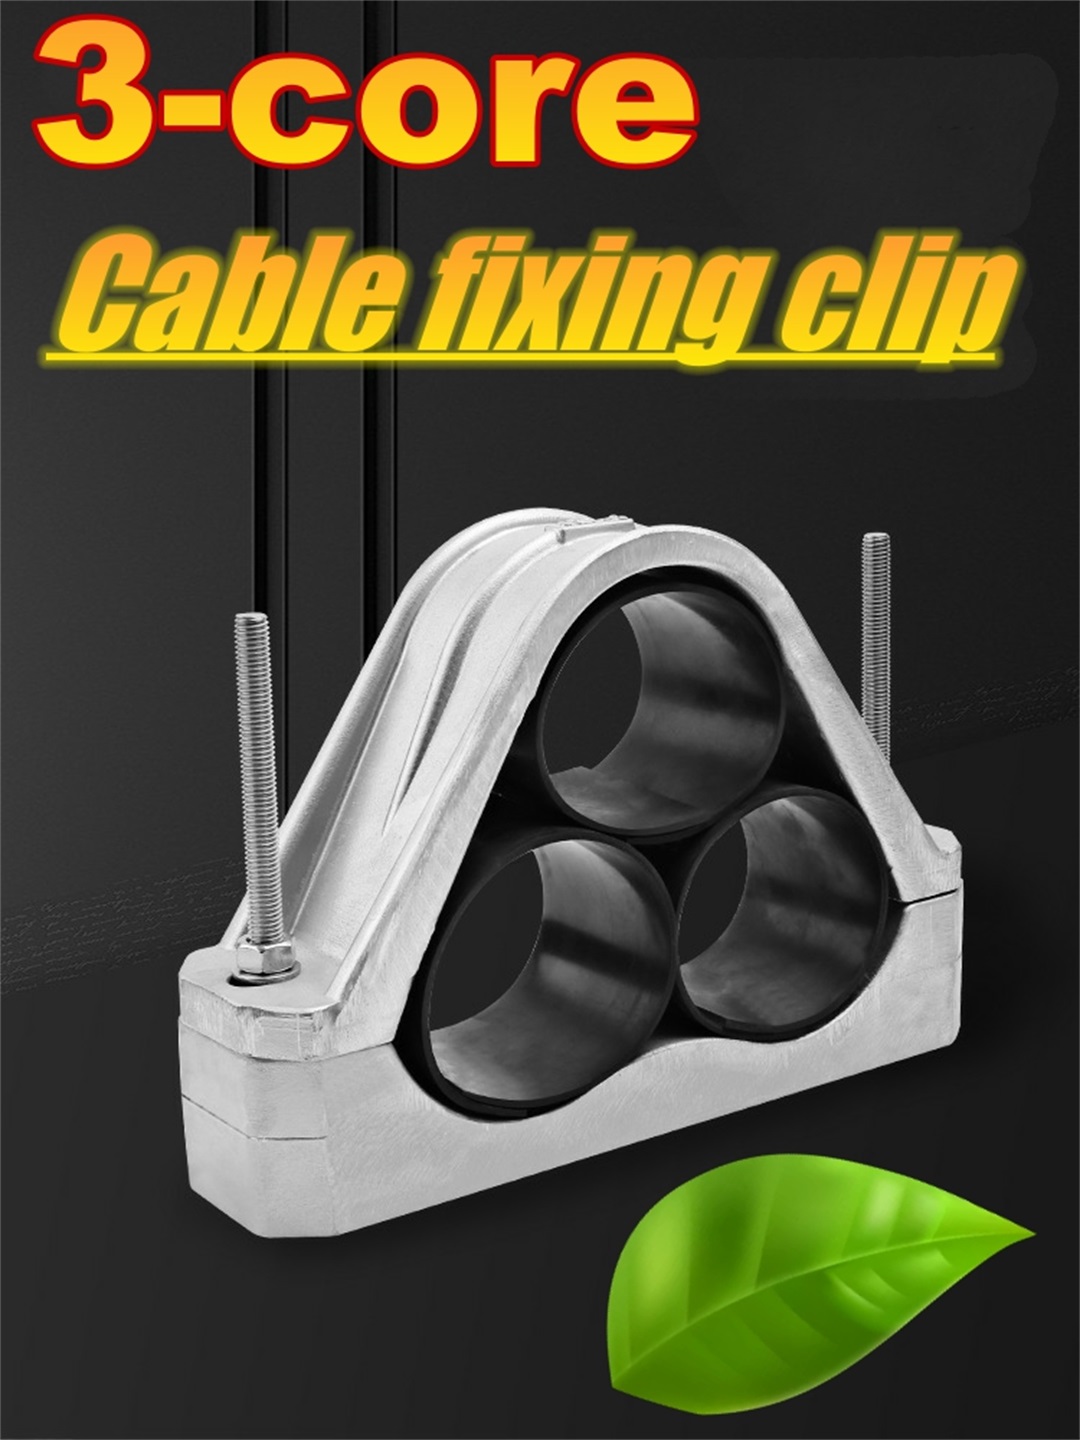 HV kabel fix clamps